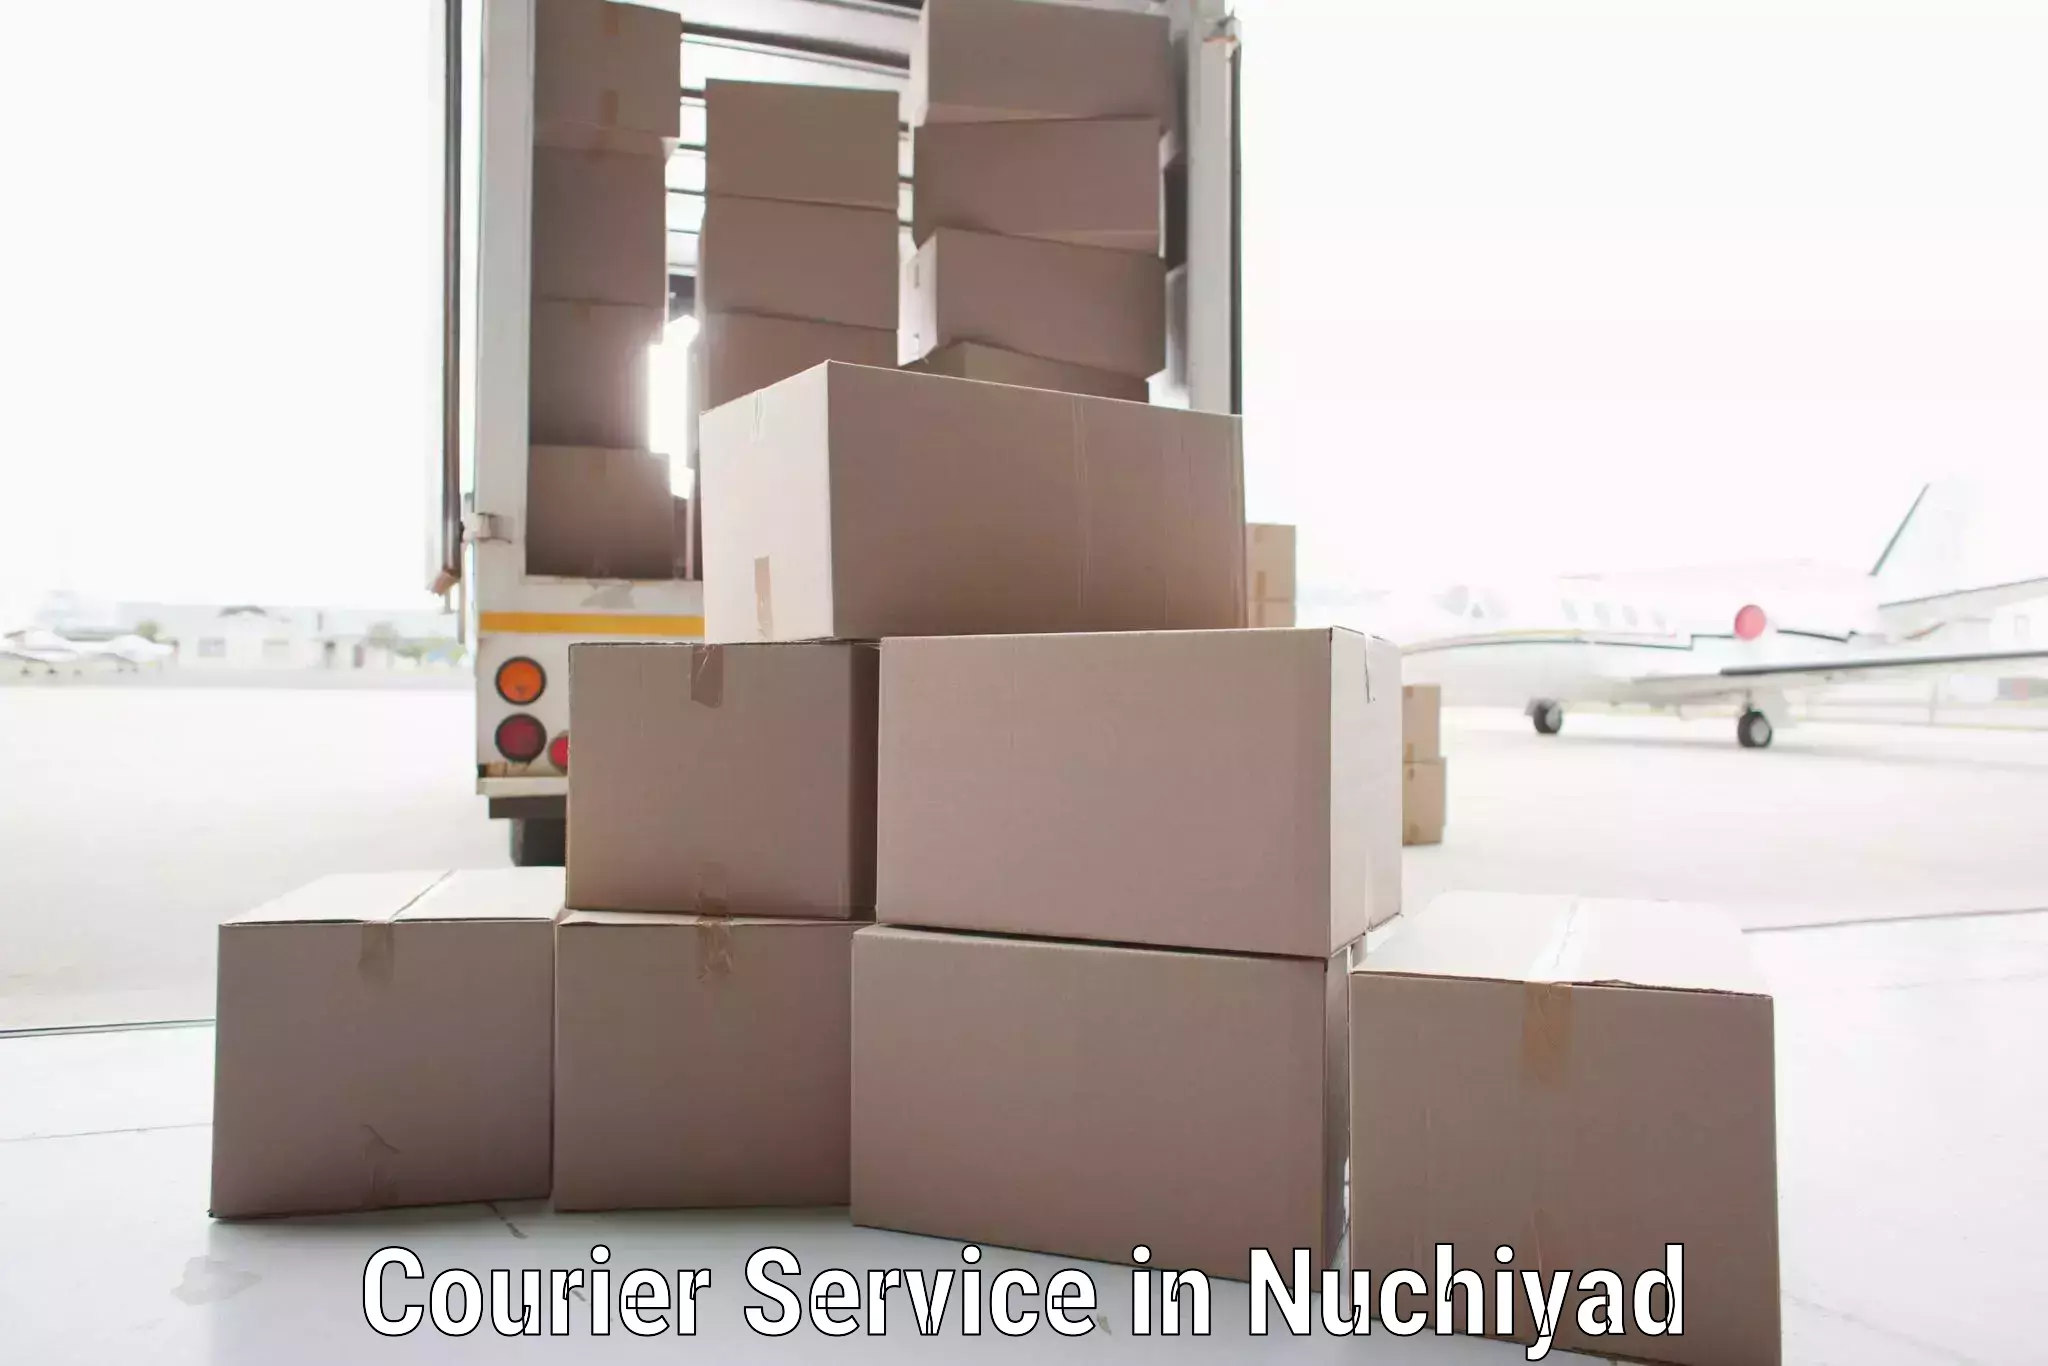 Enhanced shipping experience in Nuchiyad